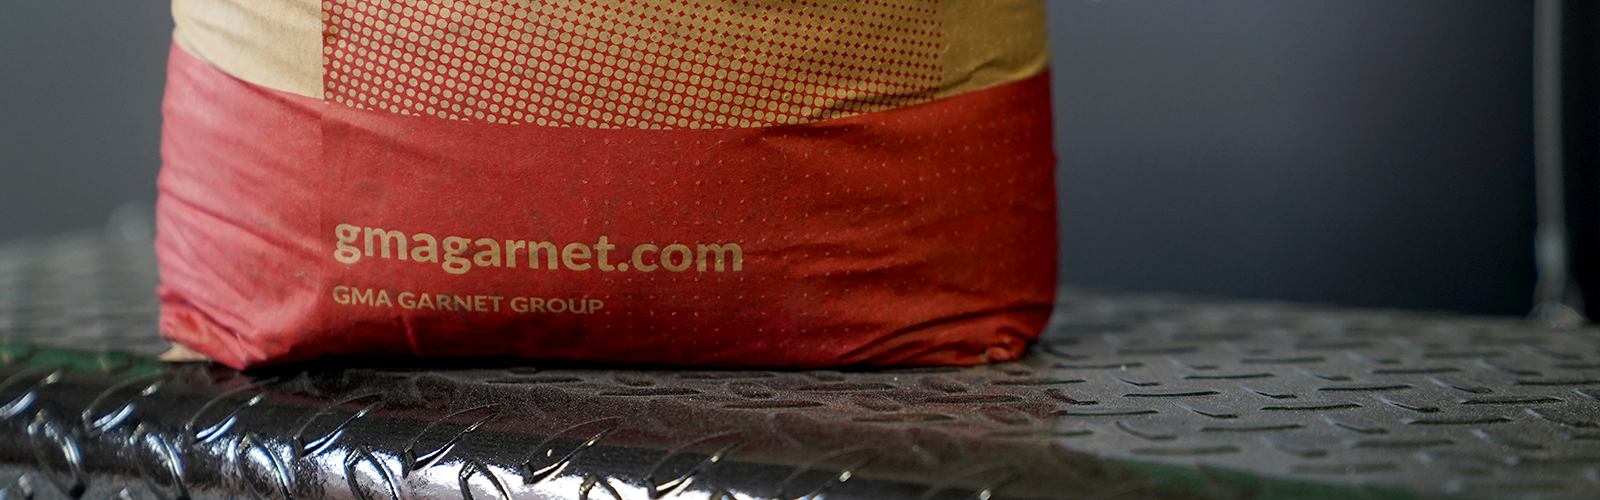 Photo: Image featuring the GMA Garnet Group logo on a bag of pyroxene media abrasive